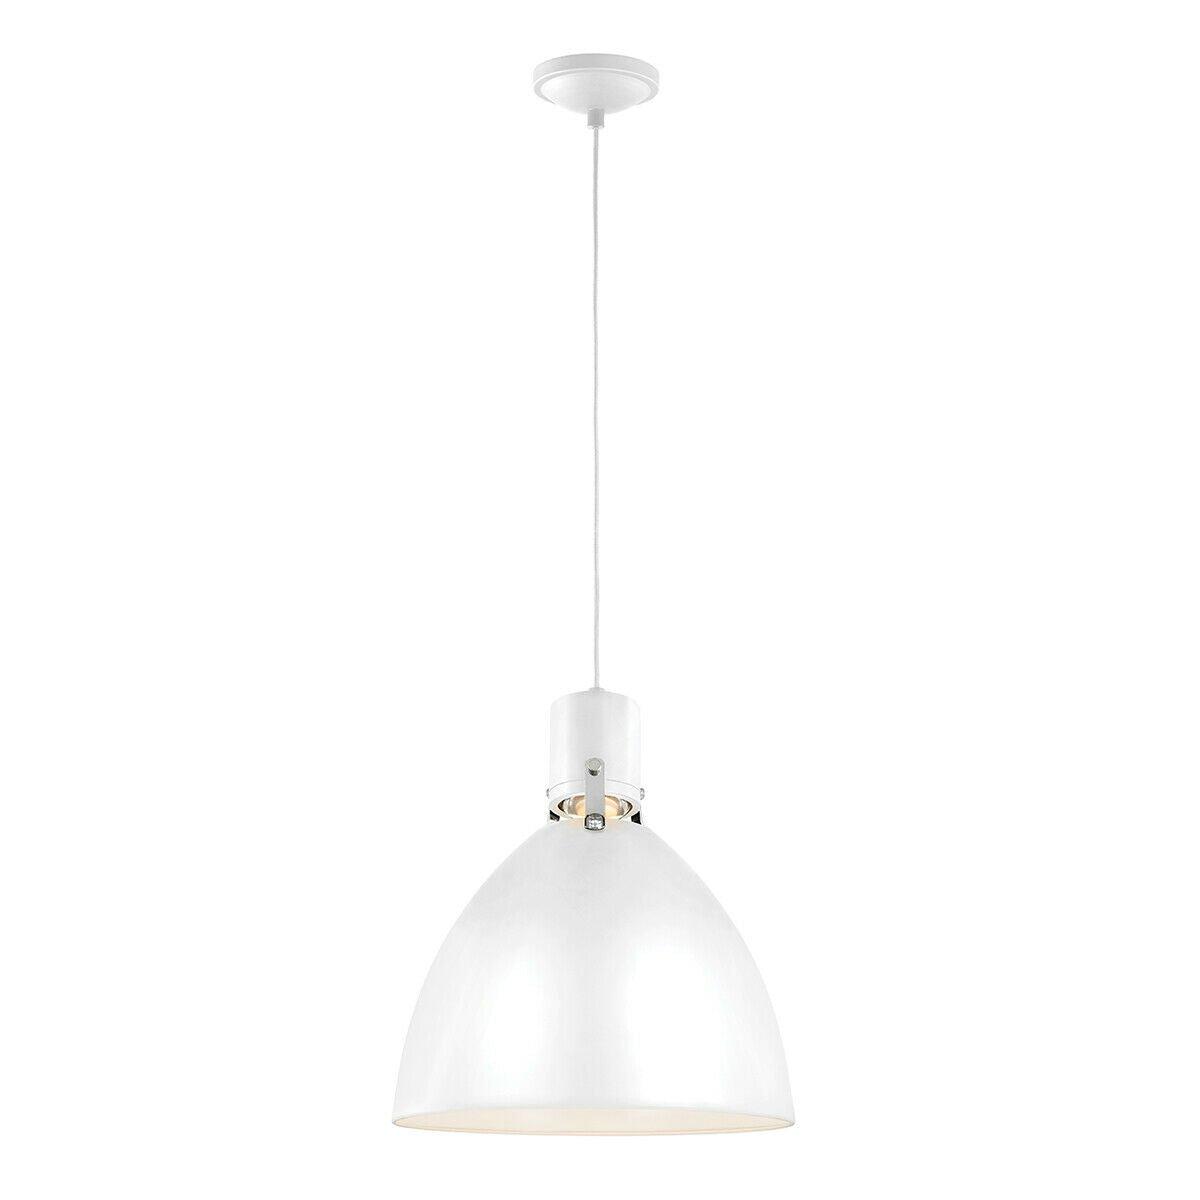 1 Bulb Ceiling Pendant Light Fitting Flat White/Chrome LED 8W Bulb